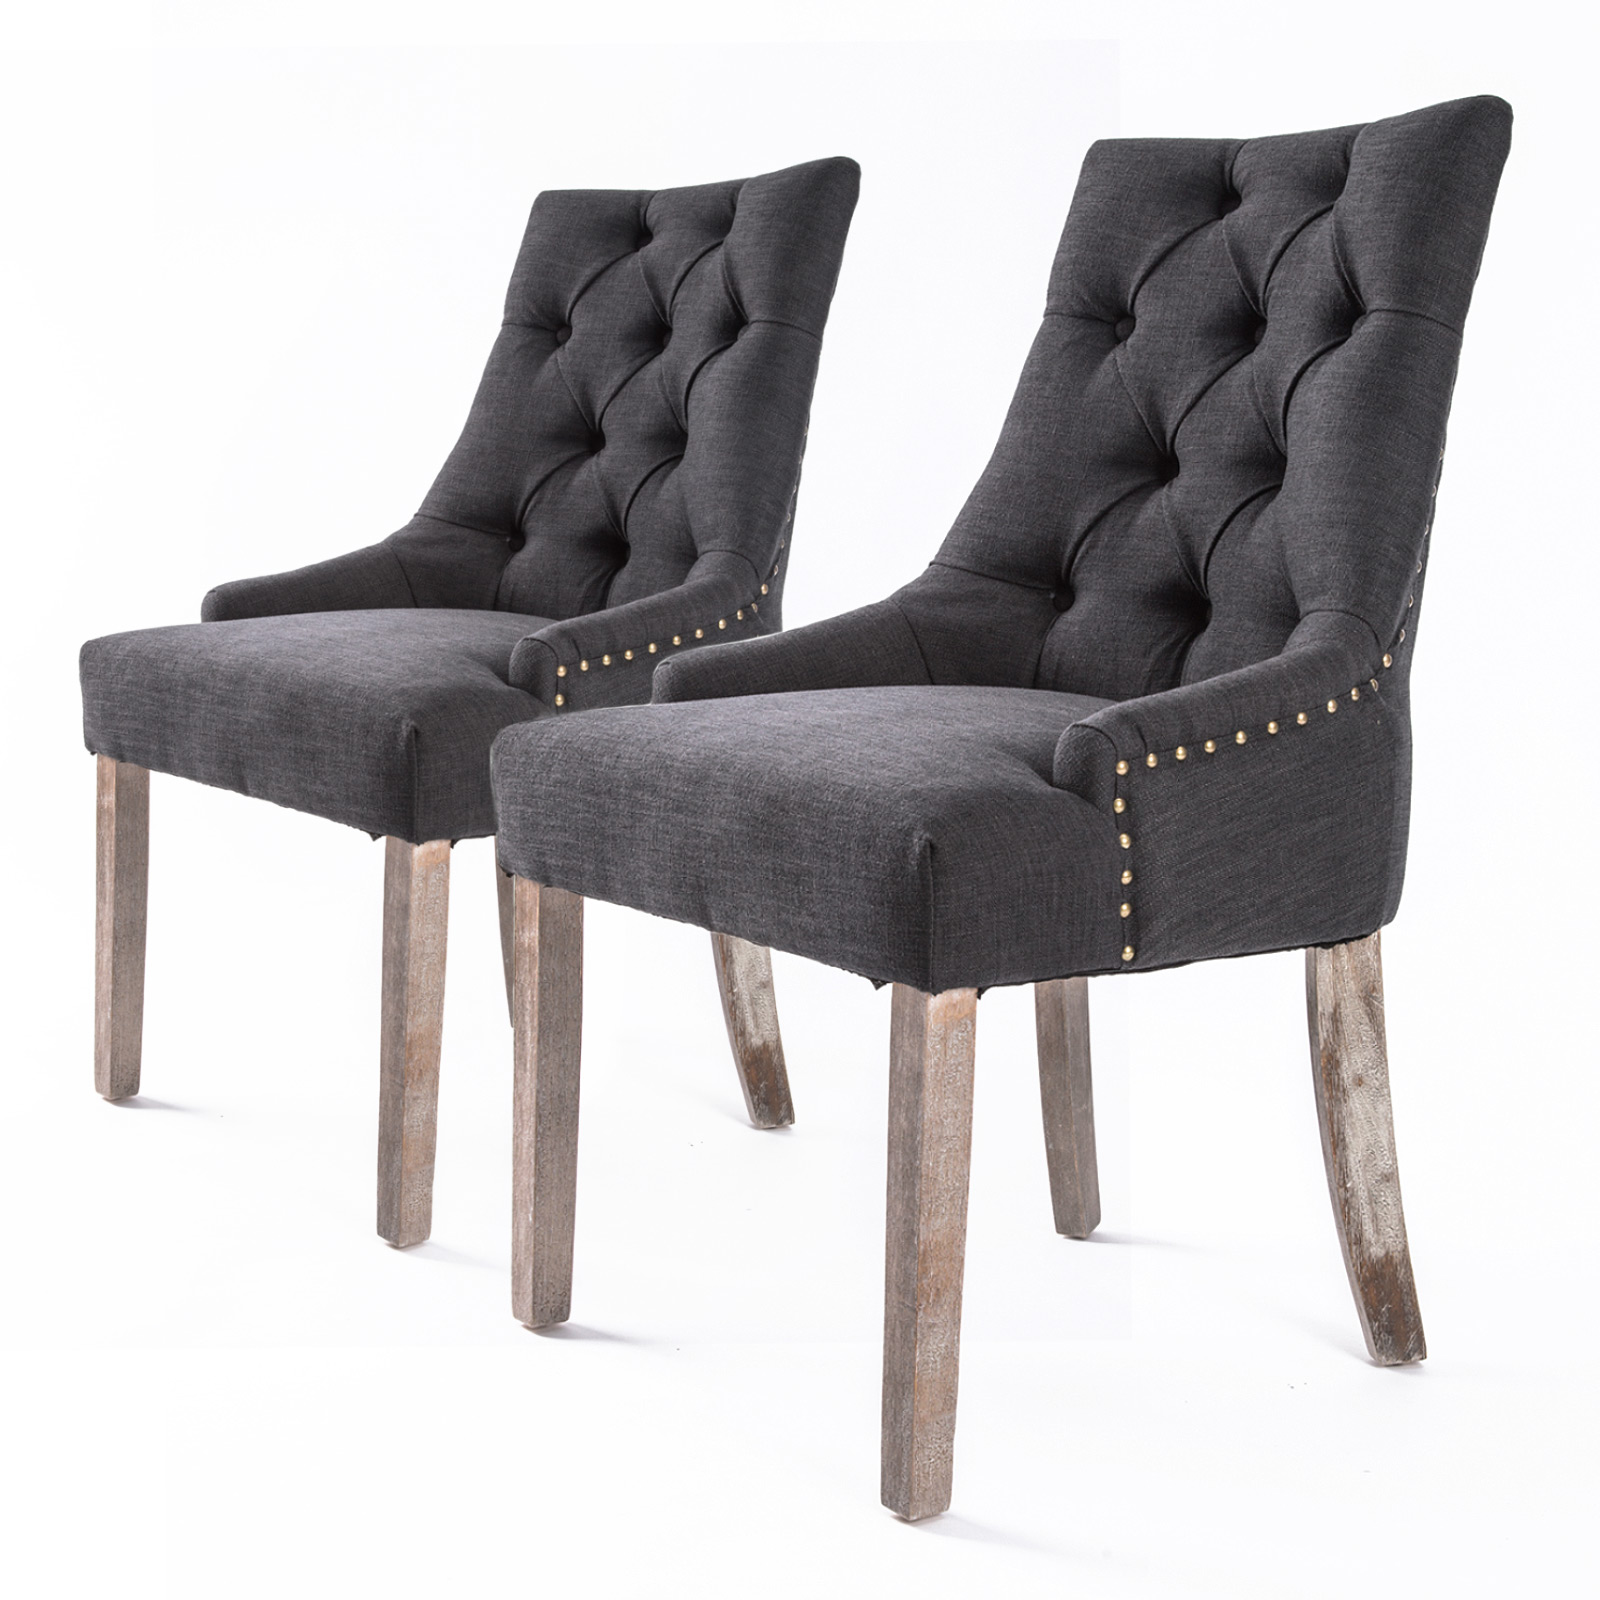 2X French Provincial Oak Leg Chair AMOUR - BLACK (CHARCOAL)